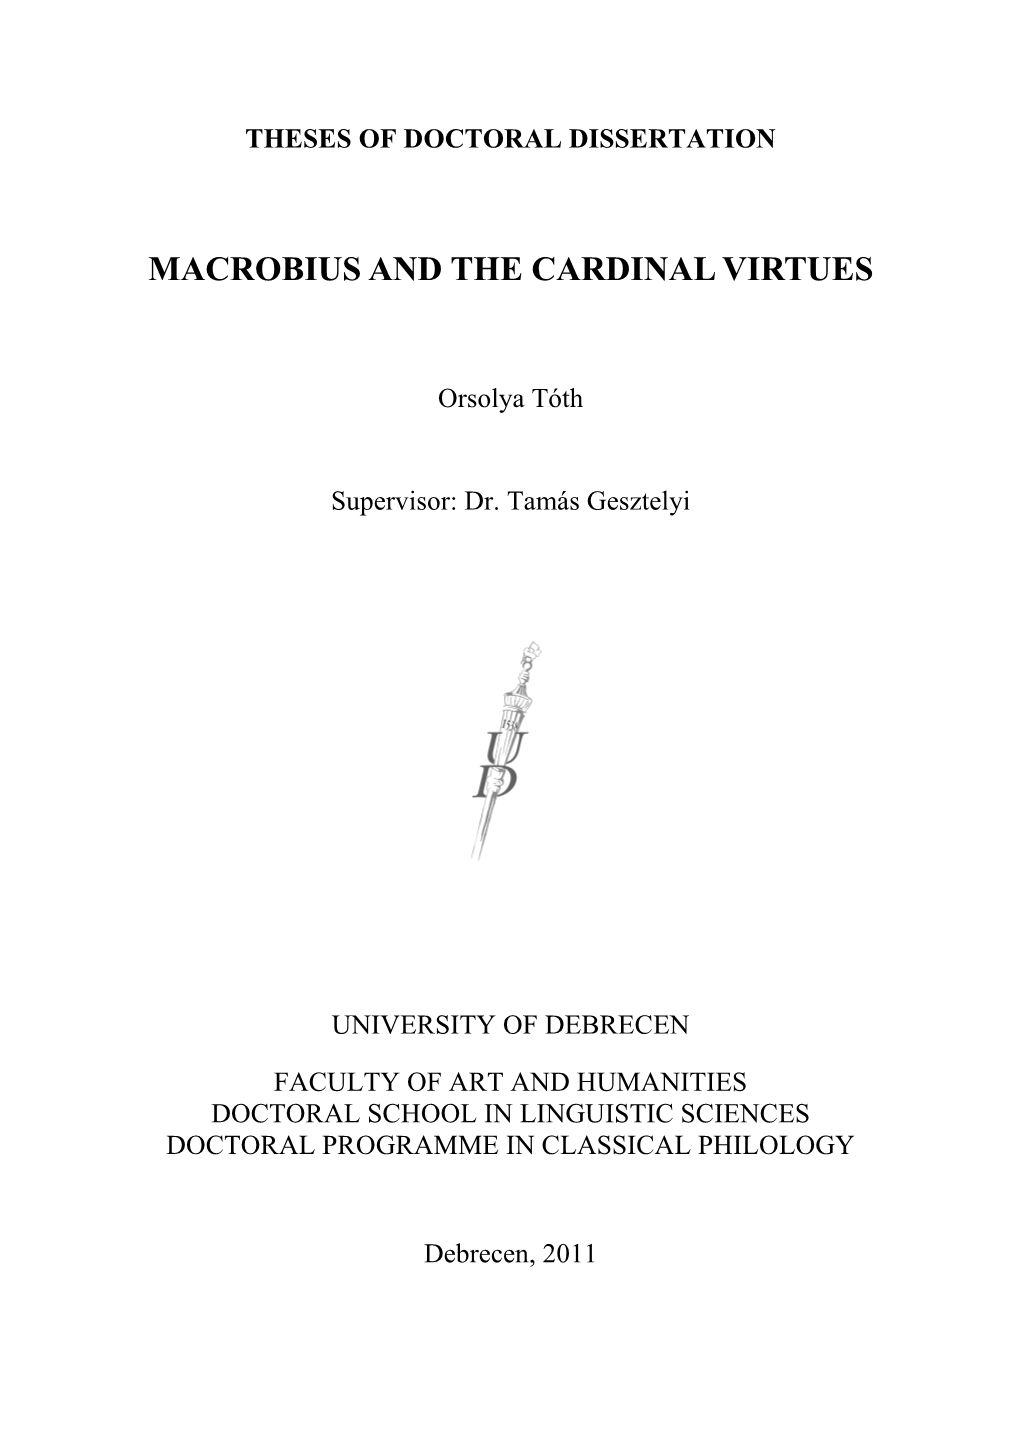 Macrobius and the Cardinal Virtues